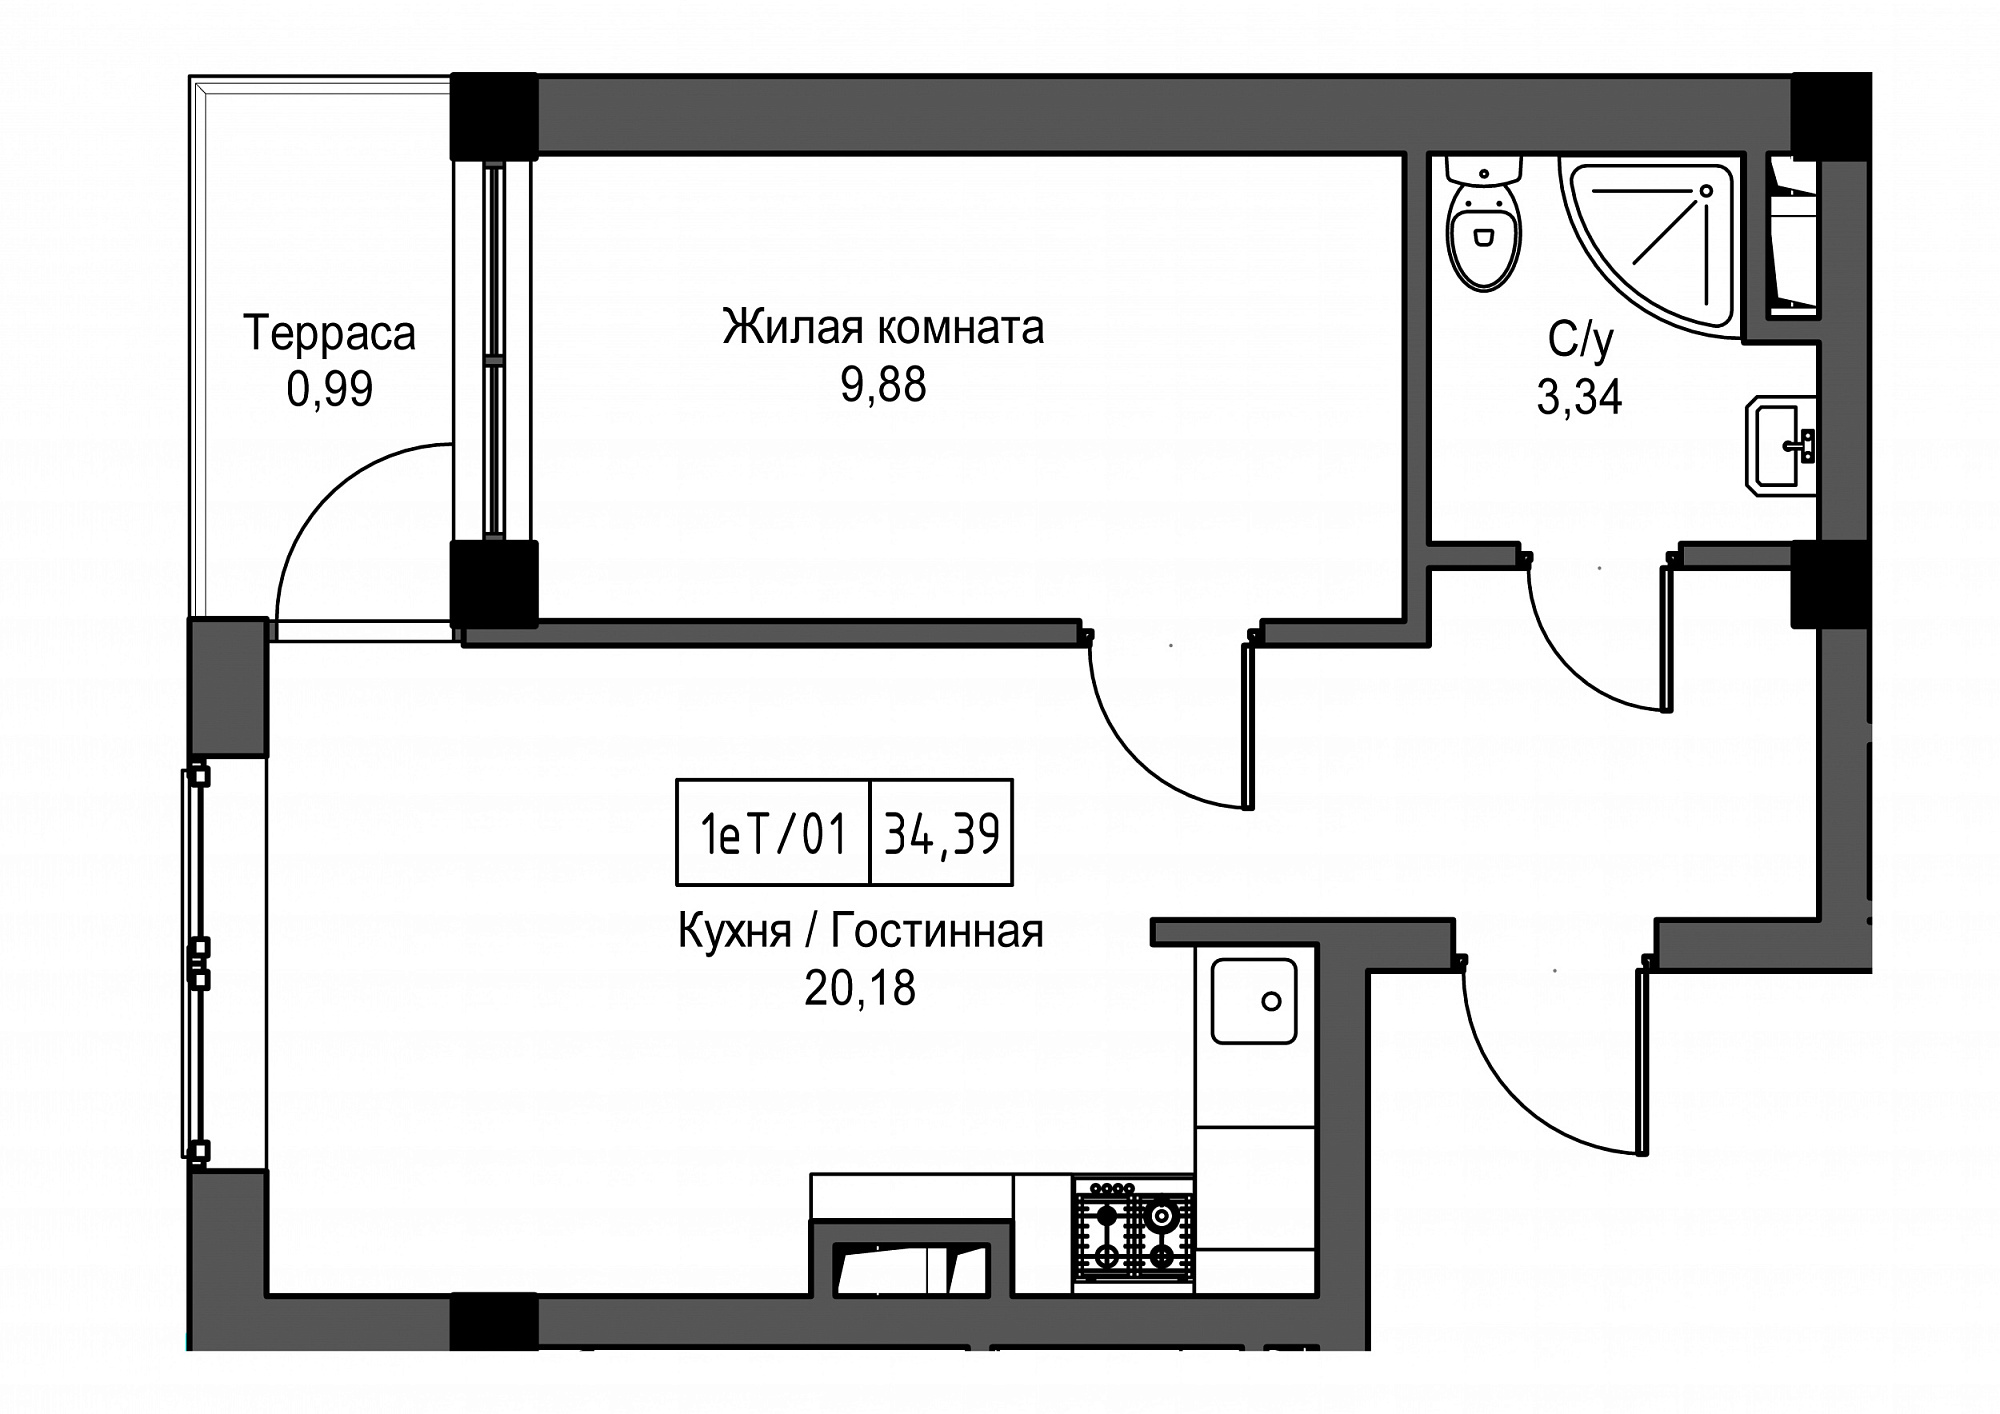 Planning 1-rm flats area 34.39m2, UM-002-02/0100.